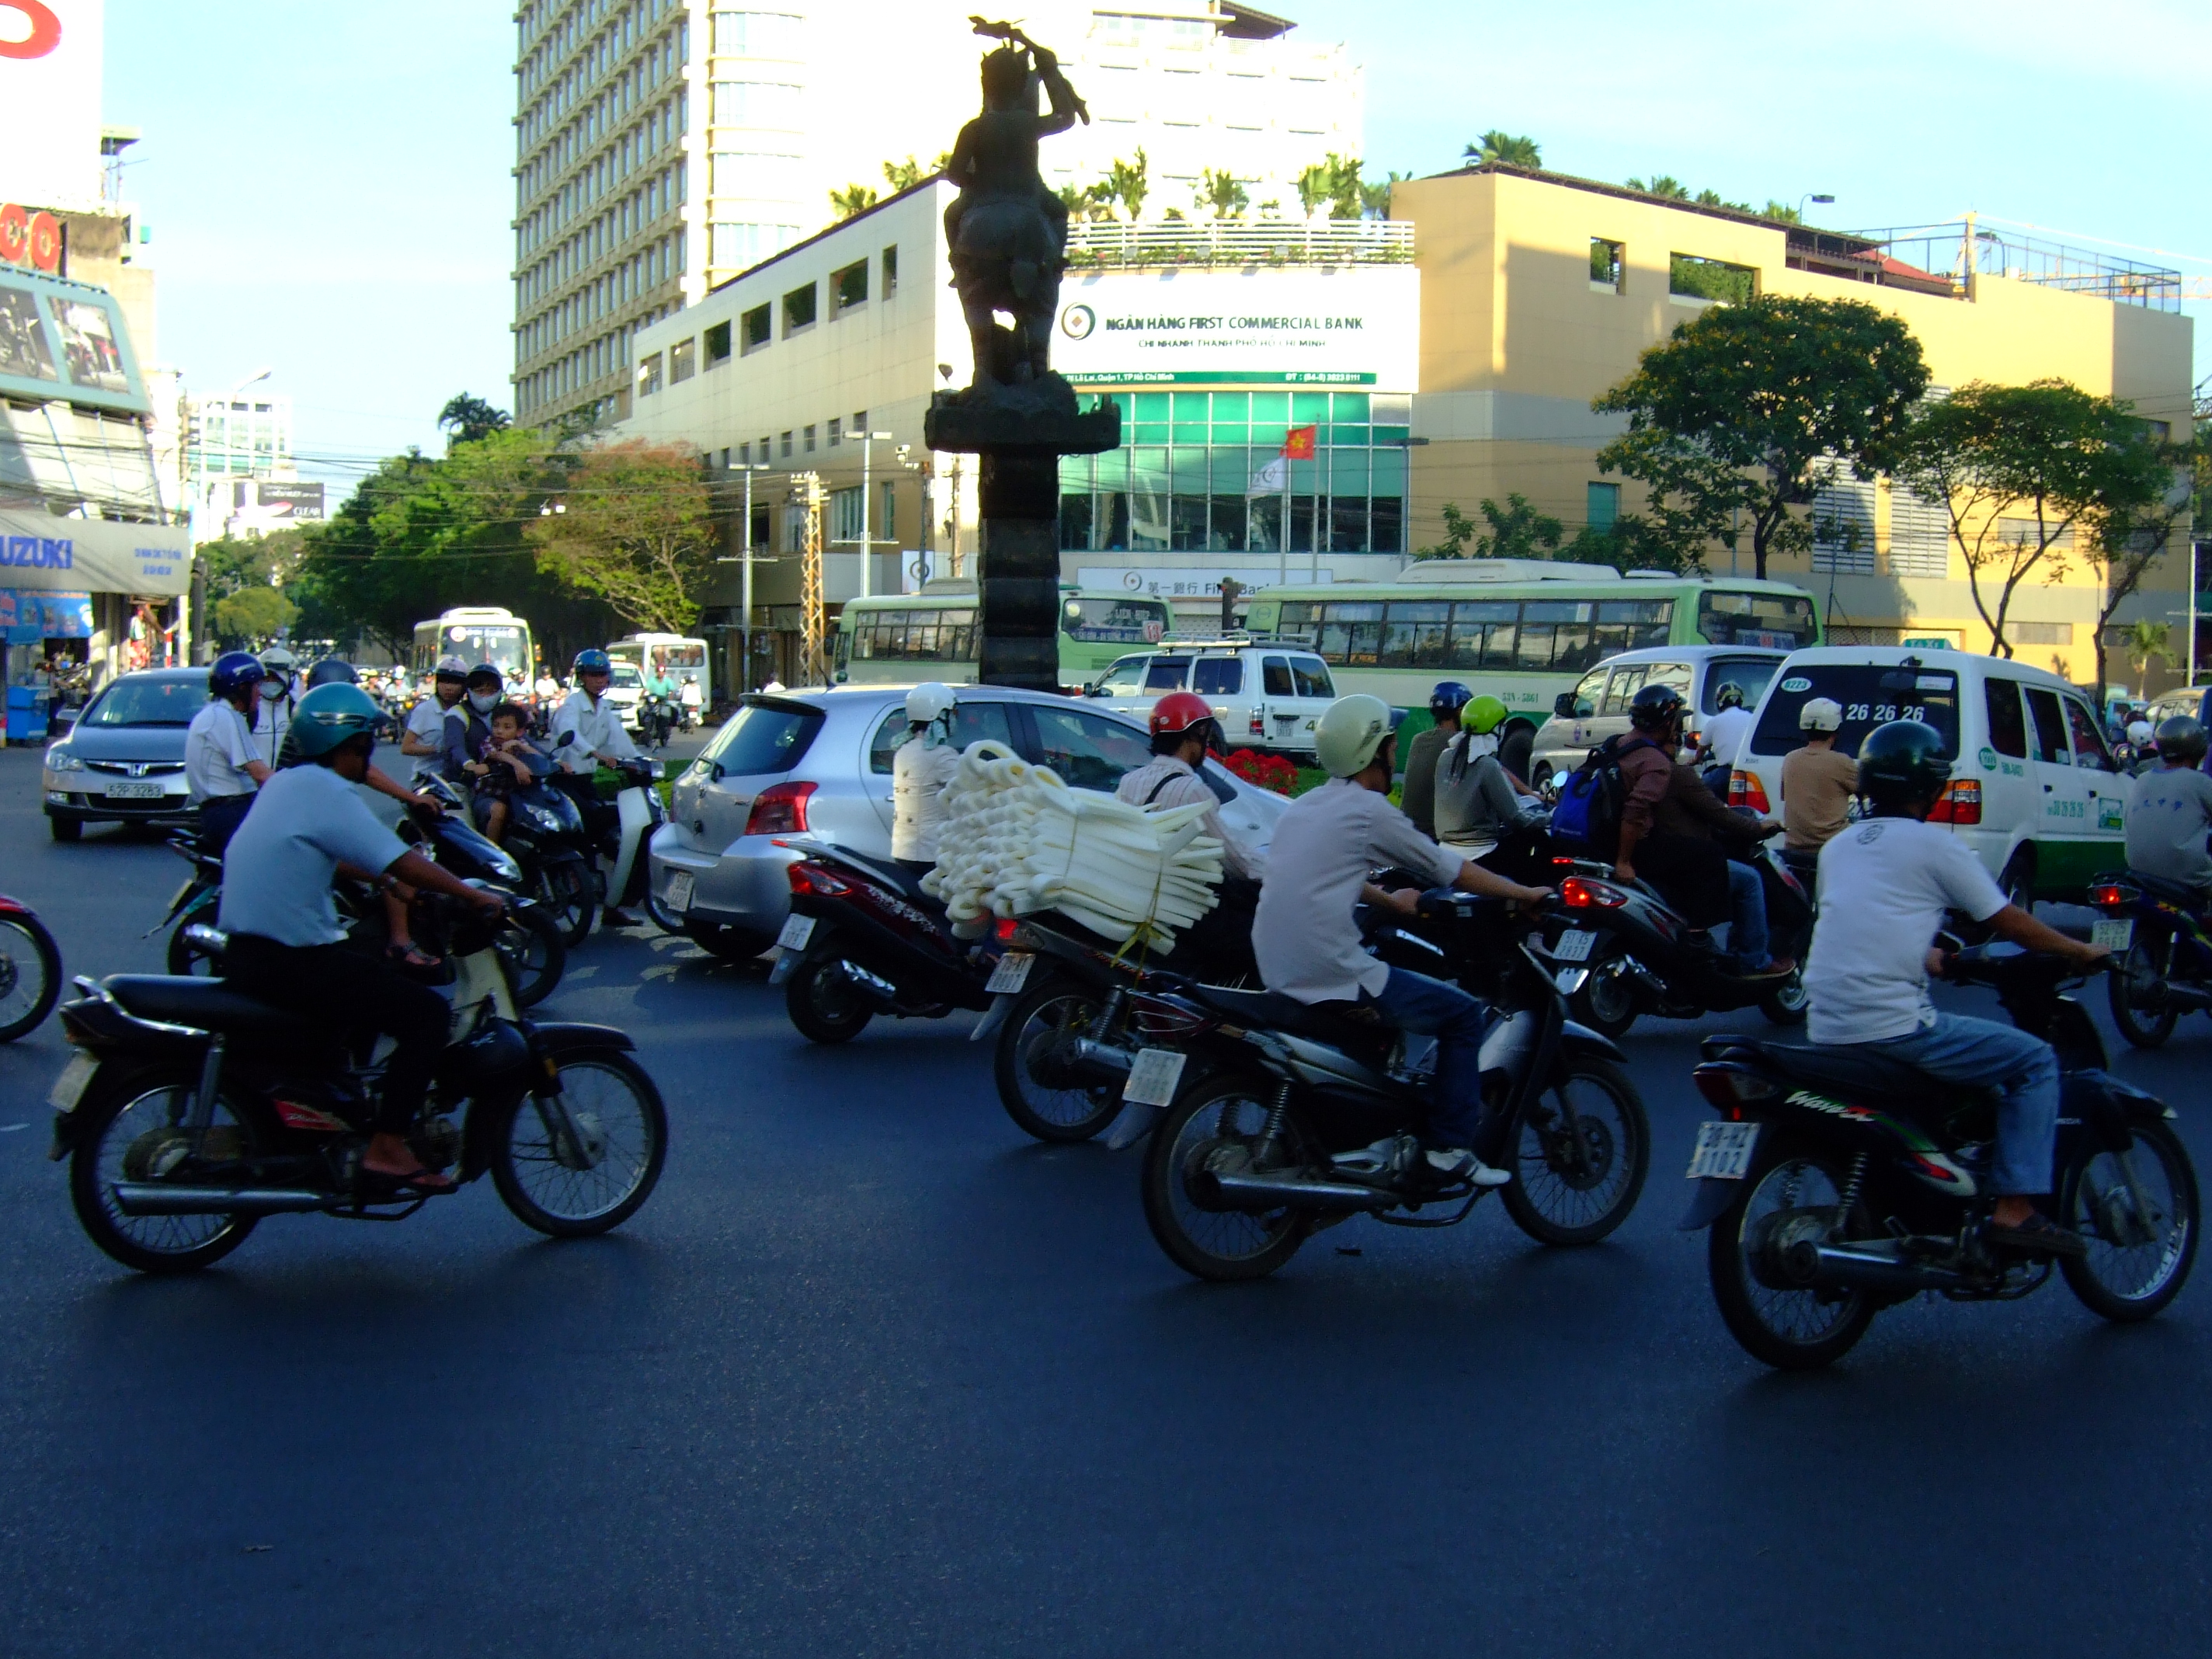 Vietnam Ho Chi Minh City motorbike street scenes Feb 2009 118